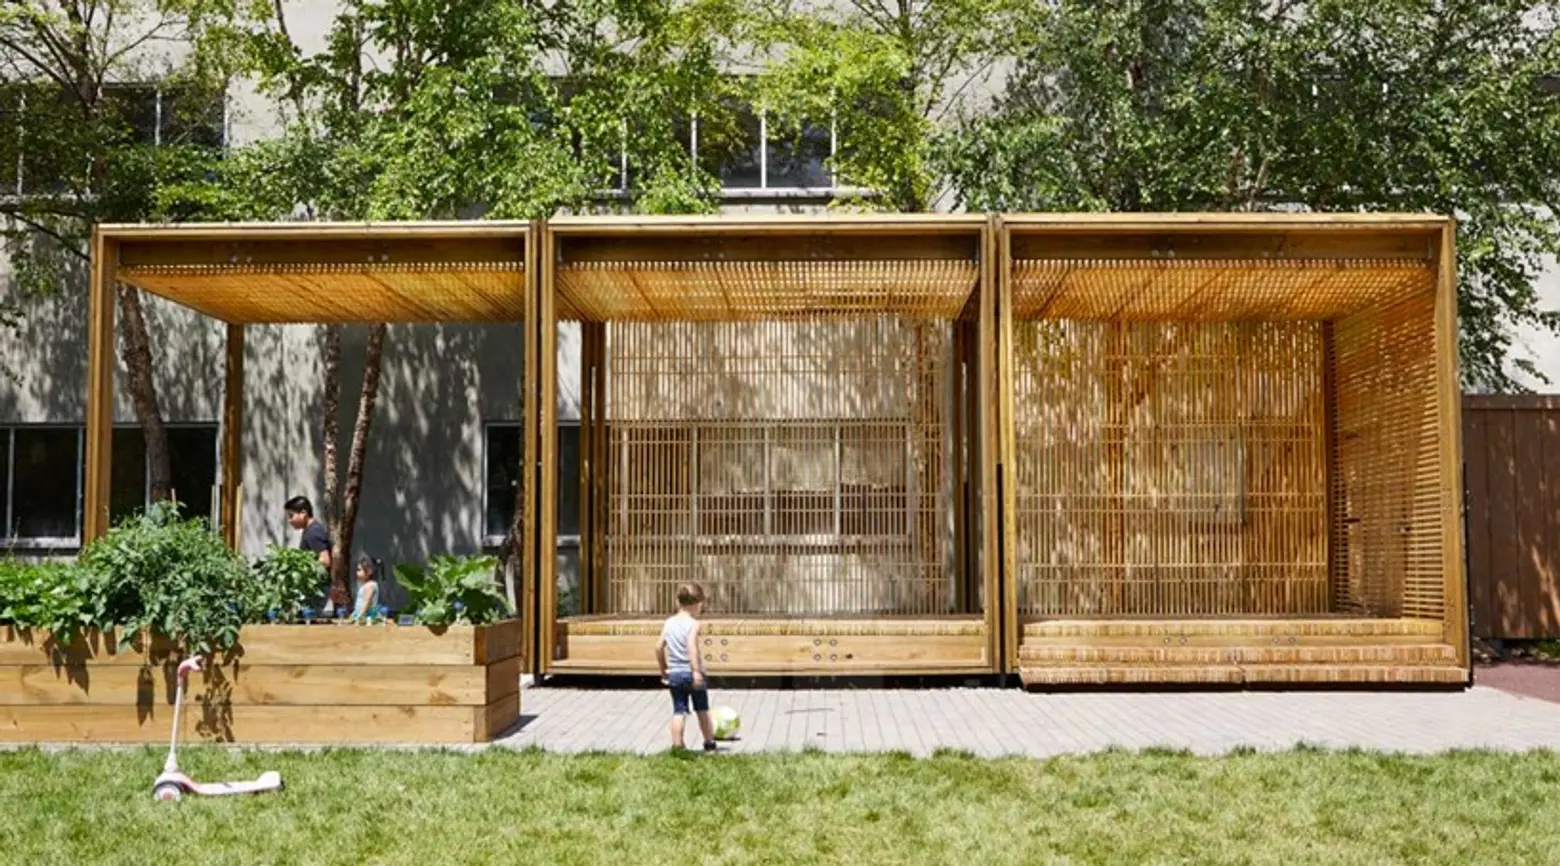 Ten Arquitectos Develop All-Purpose ‘Casitas’ for Community Gardens Around the City